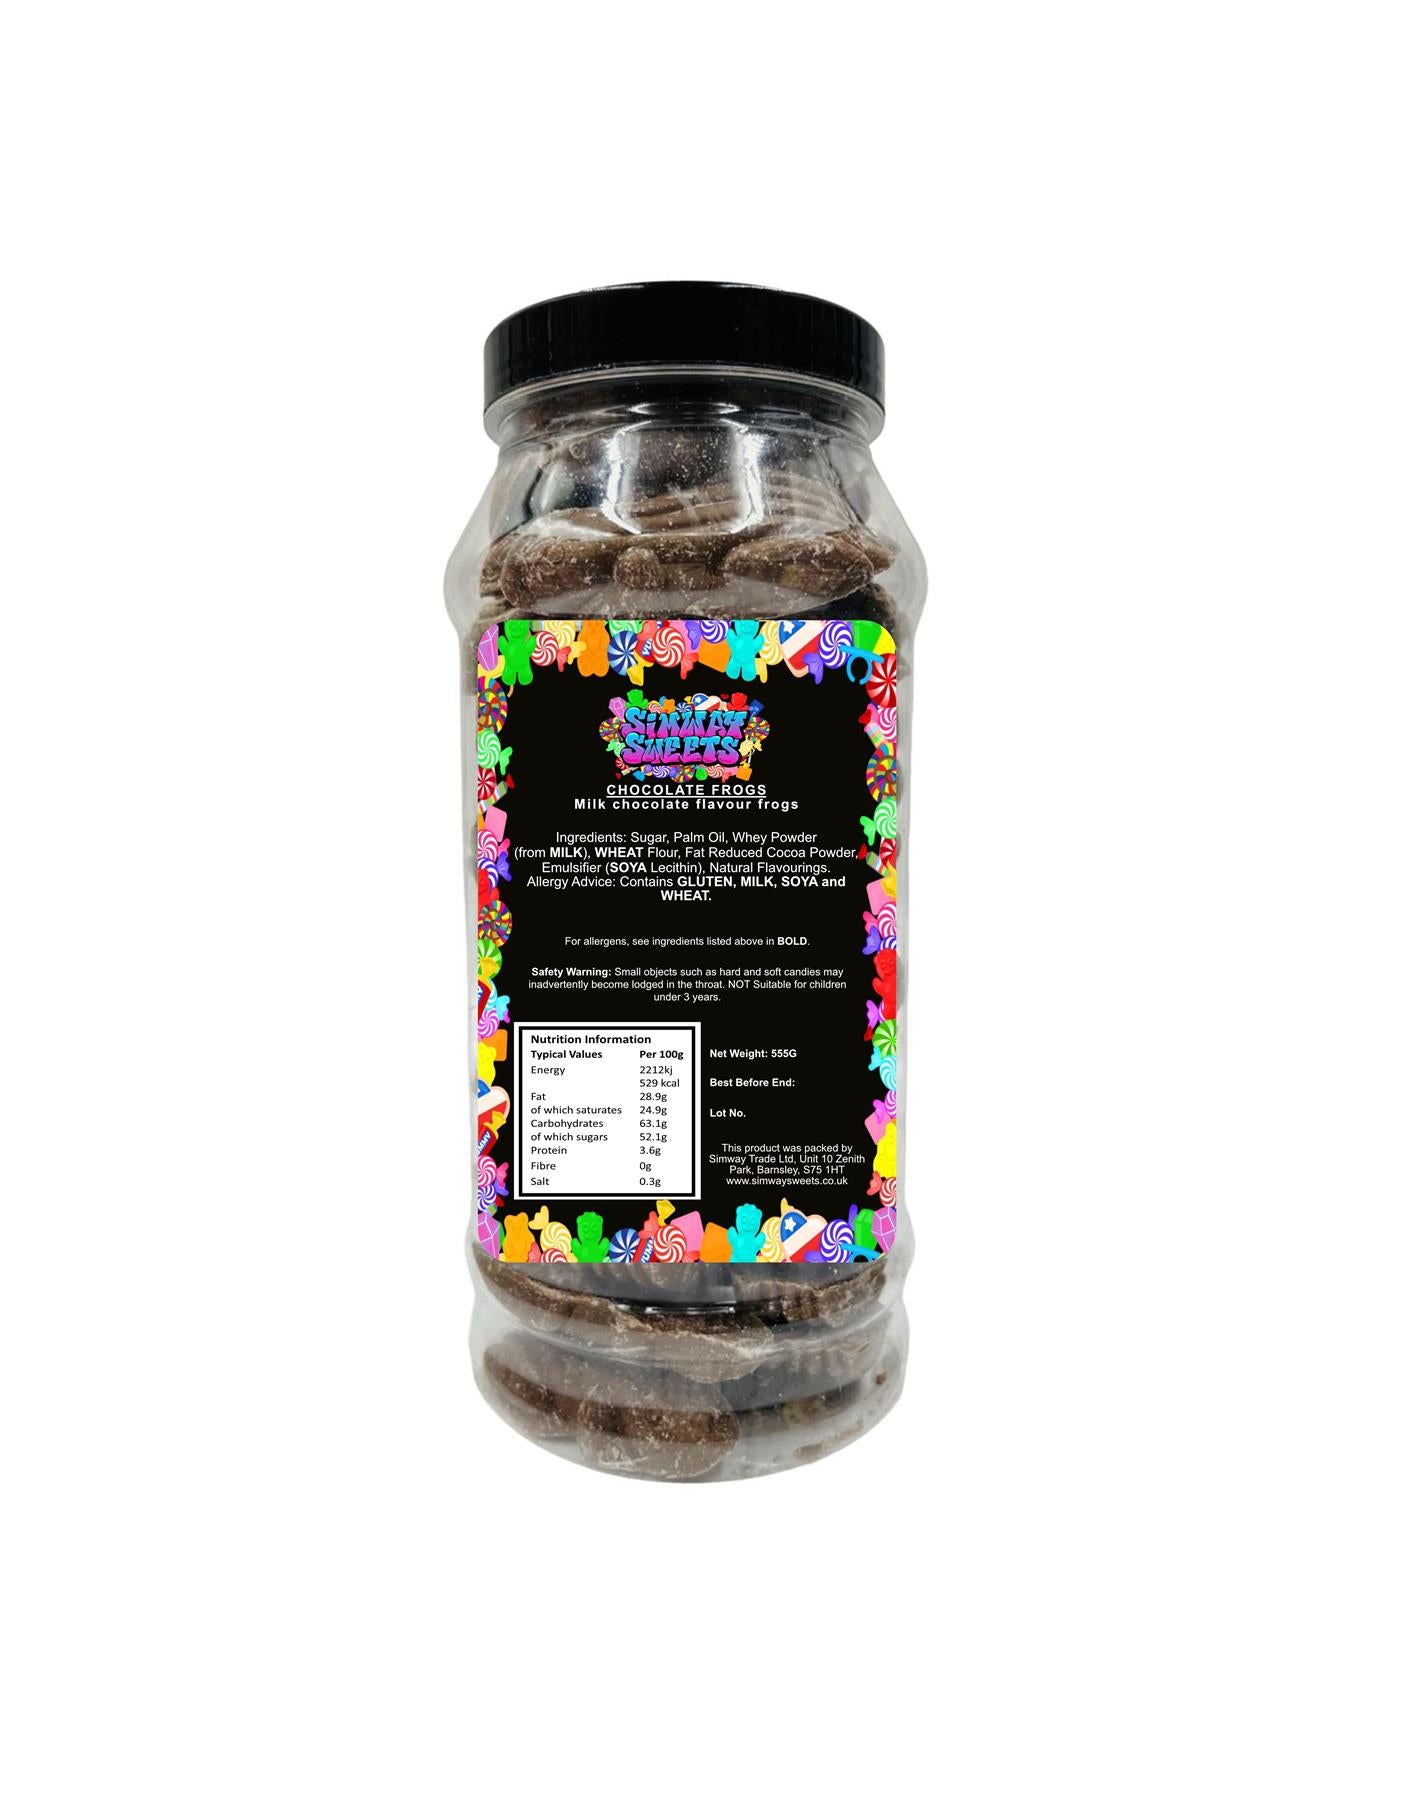 Milk Chocolate Frogs Retro Sweets Gift Jar - 555g